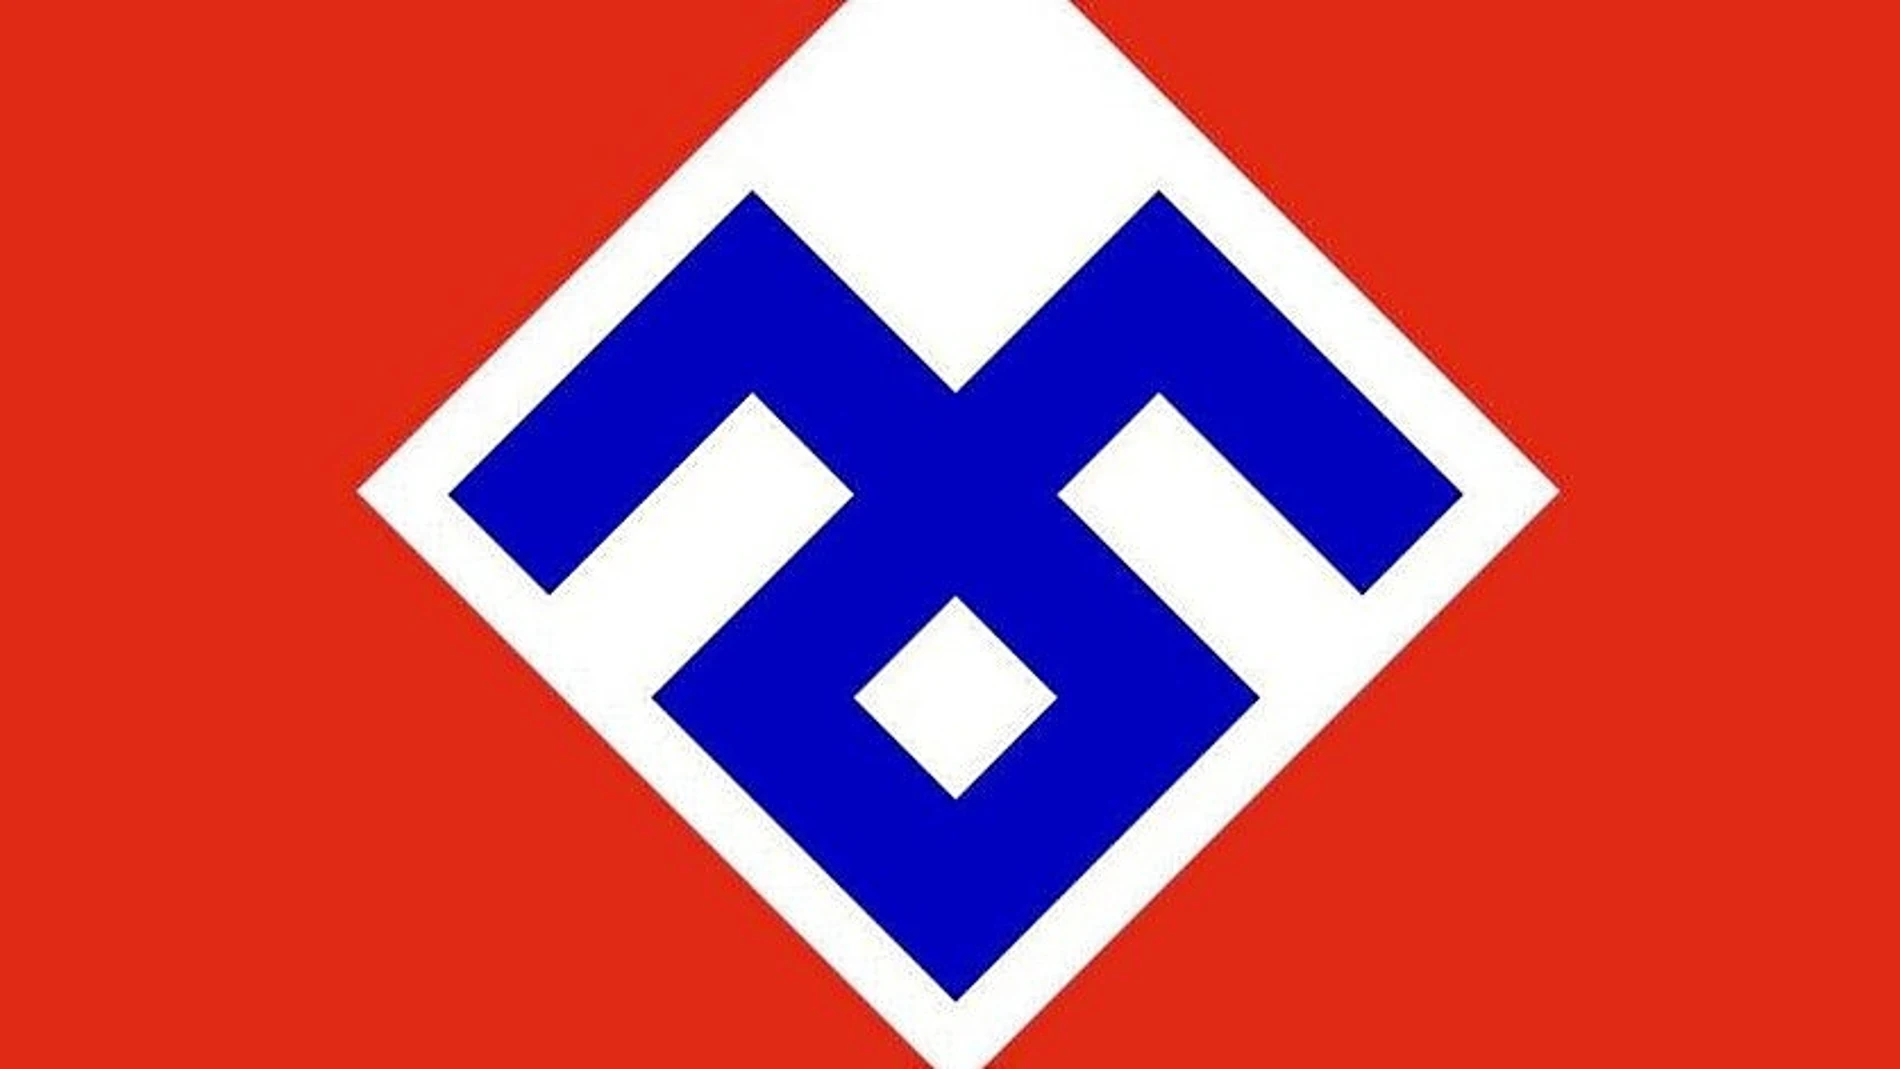 Emblema del partido fascista Reagrupación Nacional Popular, que existió en Francia de 1941 a 1944